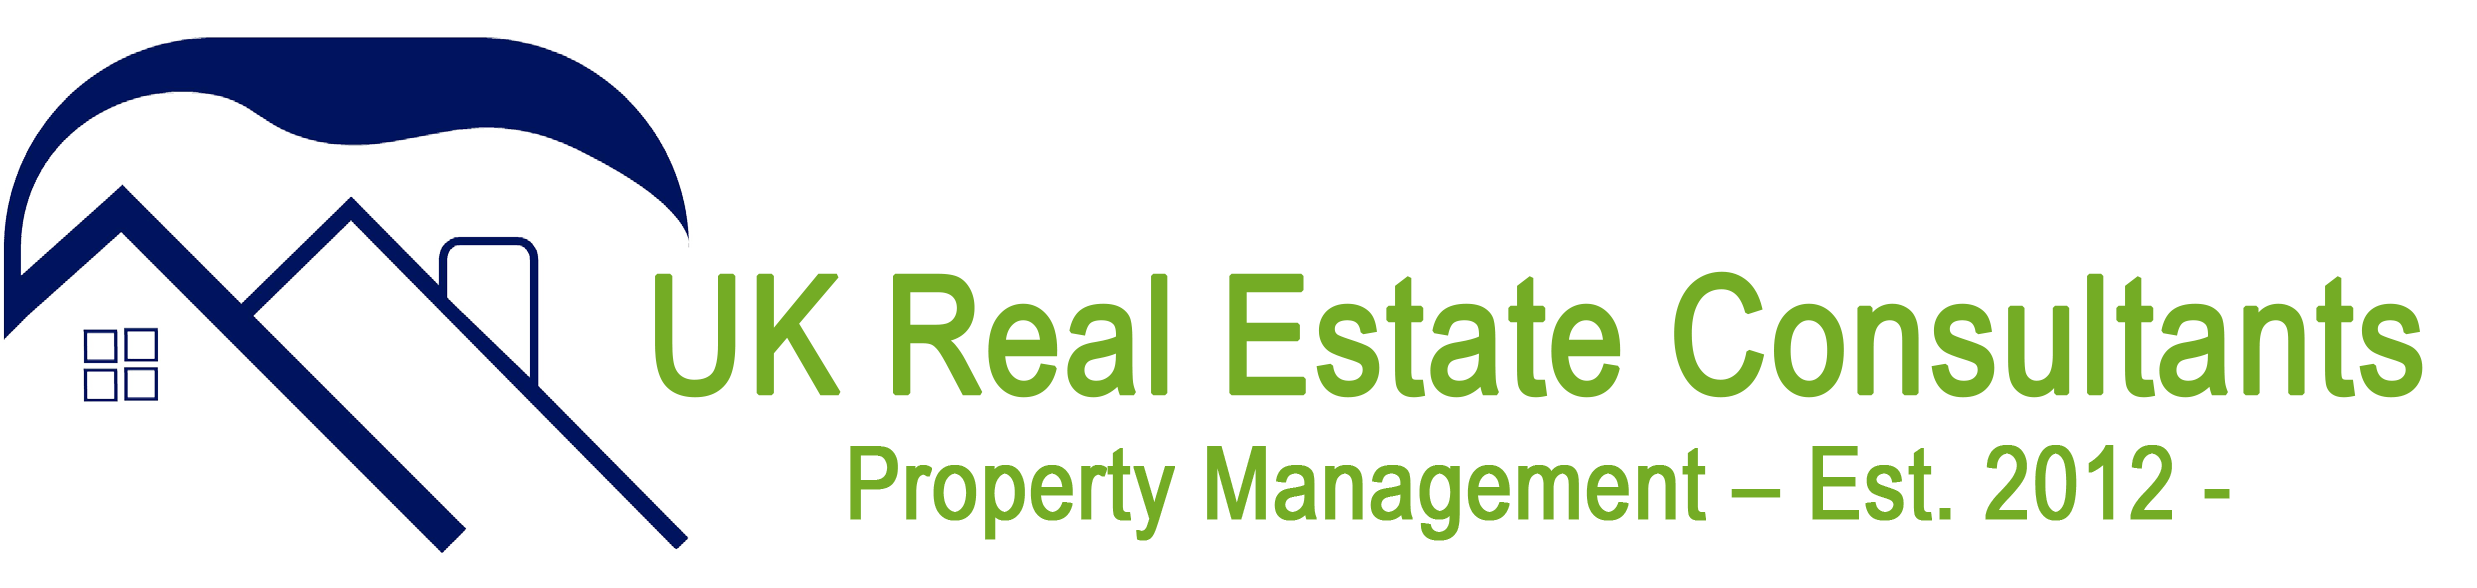 UK Real Estate Consultants Ltd